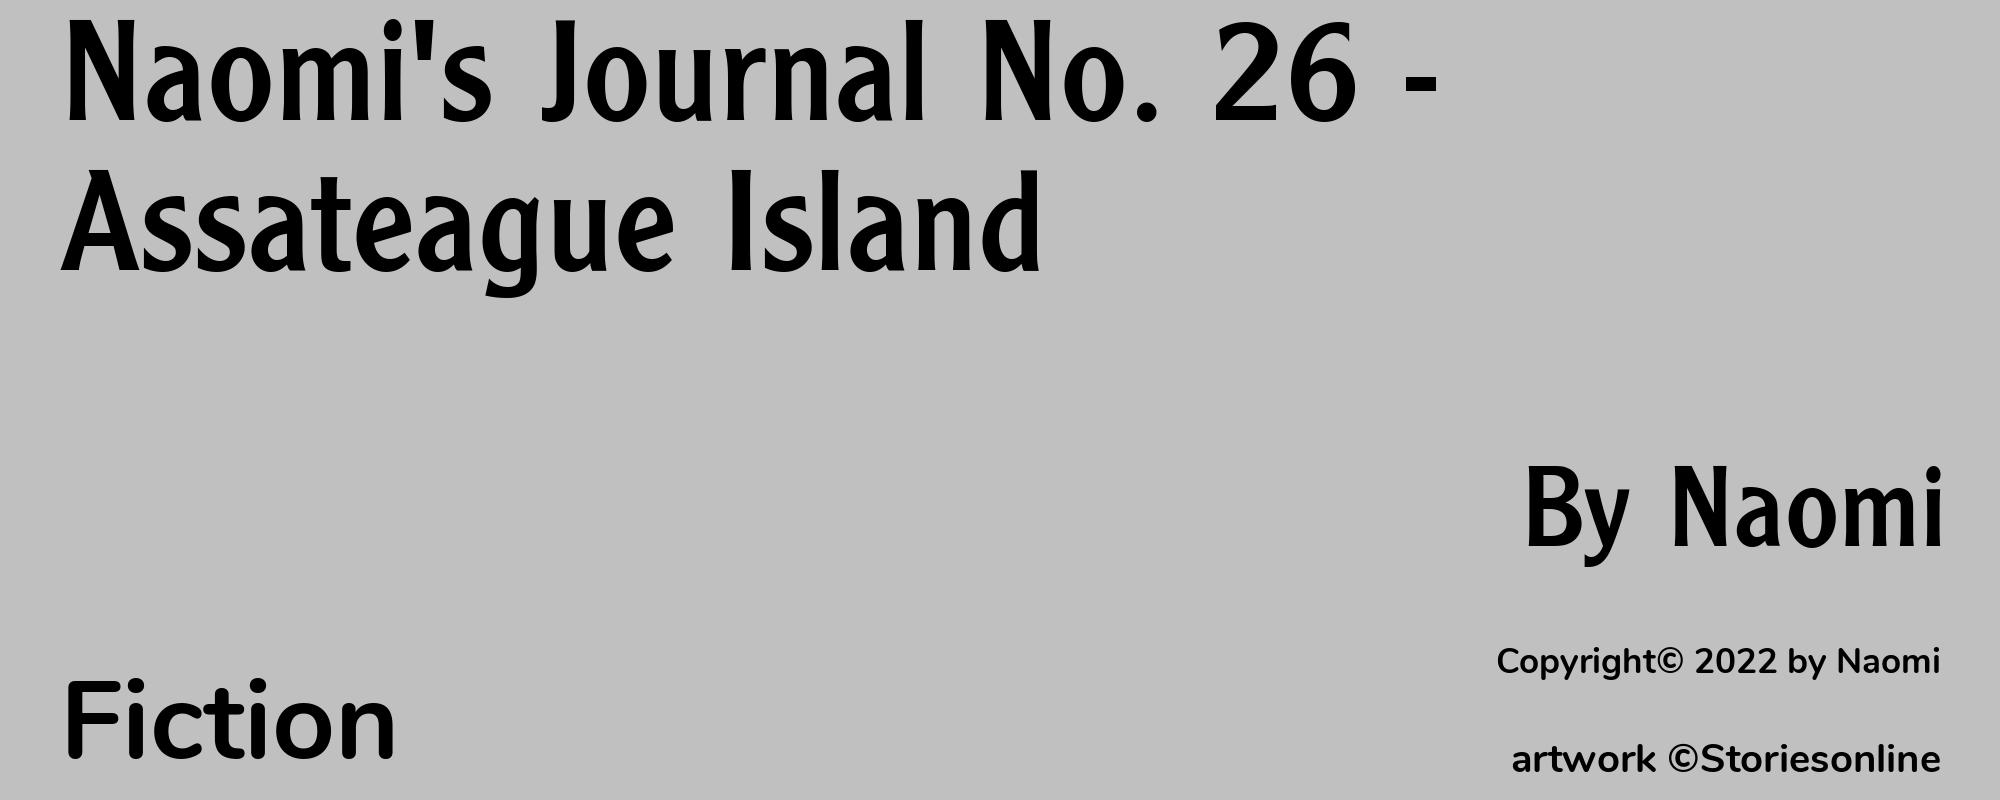 Naomi's Journal No. 26 - Assateague Island - Cover